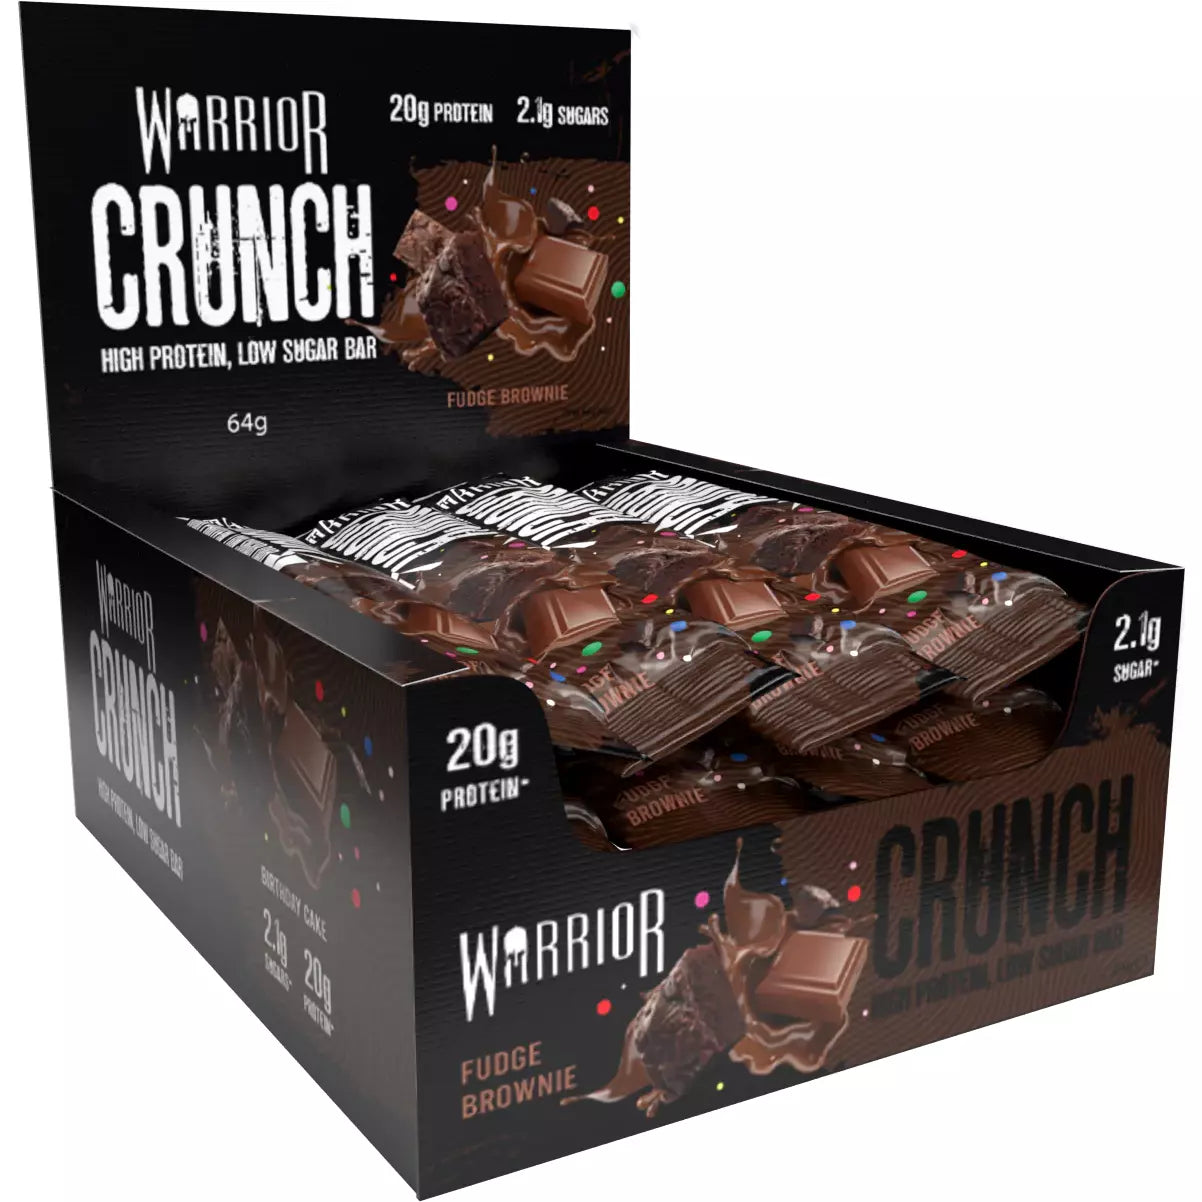 Warrior Crunch Low-Carb Protein Bars (Box of 12) Protein Snacks Fudge Brownie warrior supplements warrior-crunch-protein-bars-box-of-12